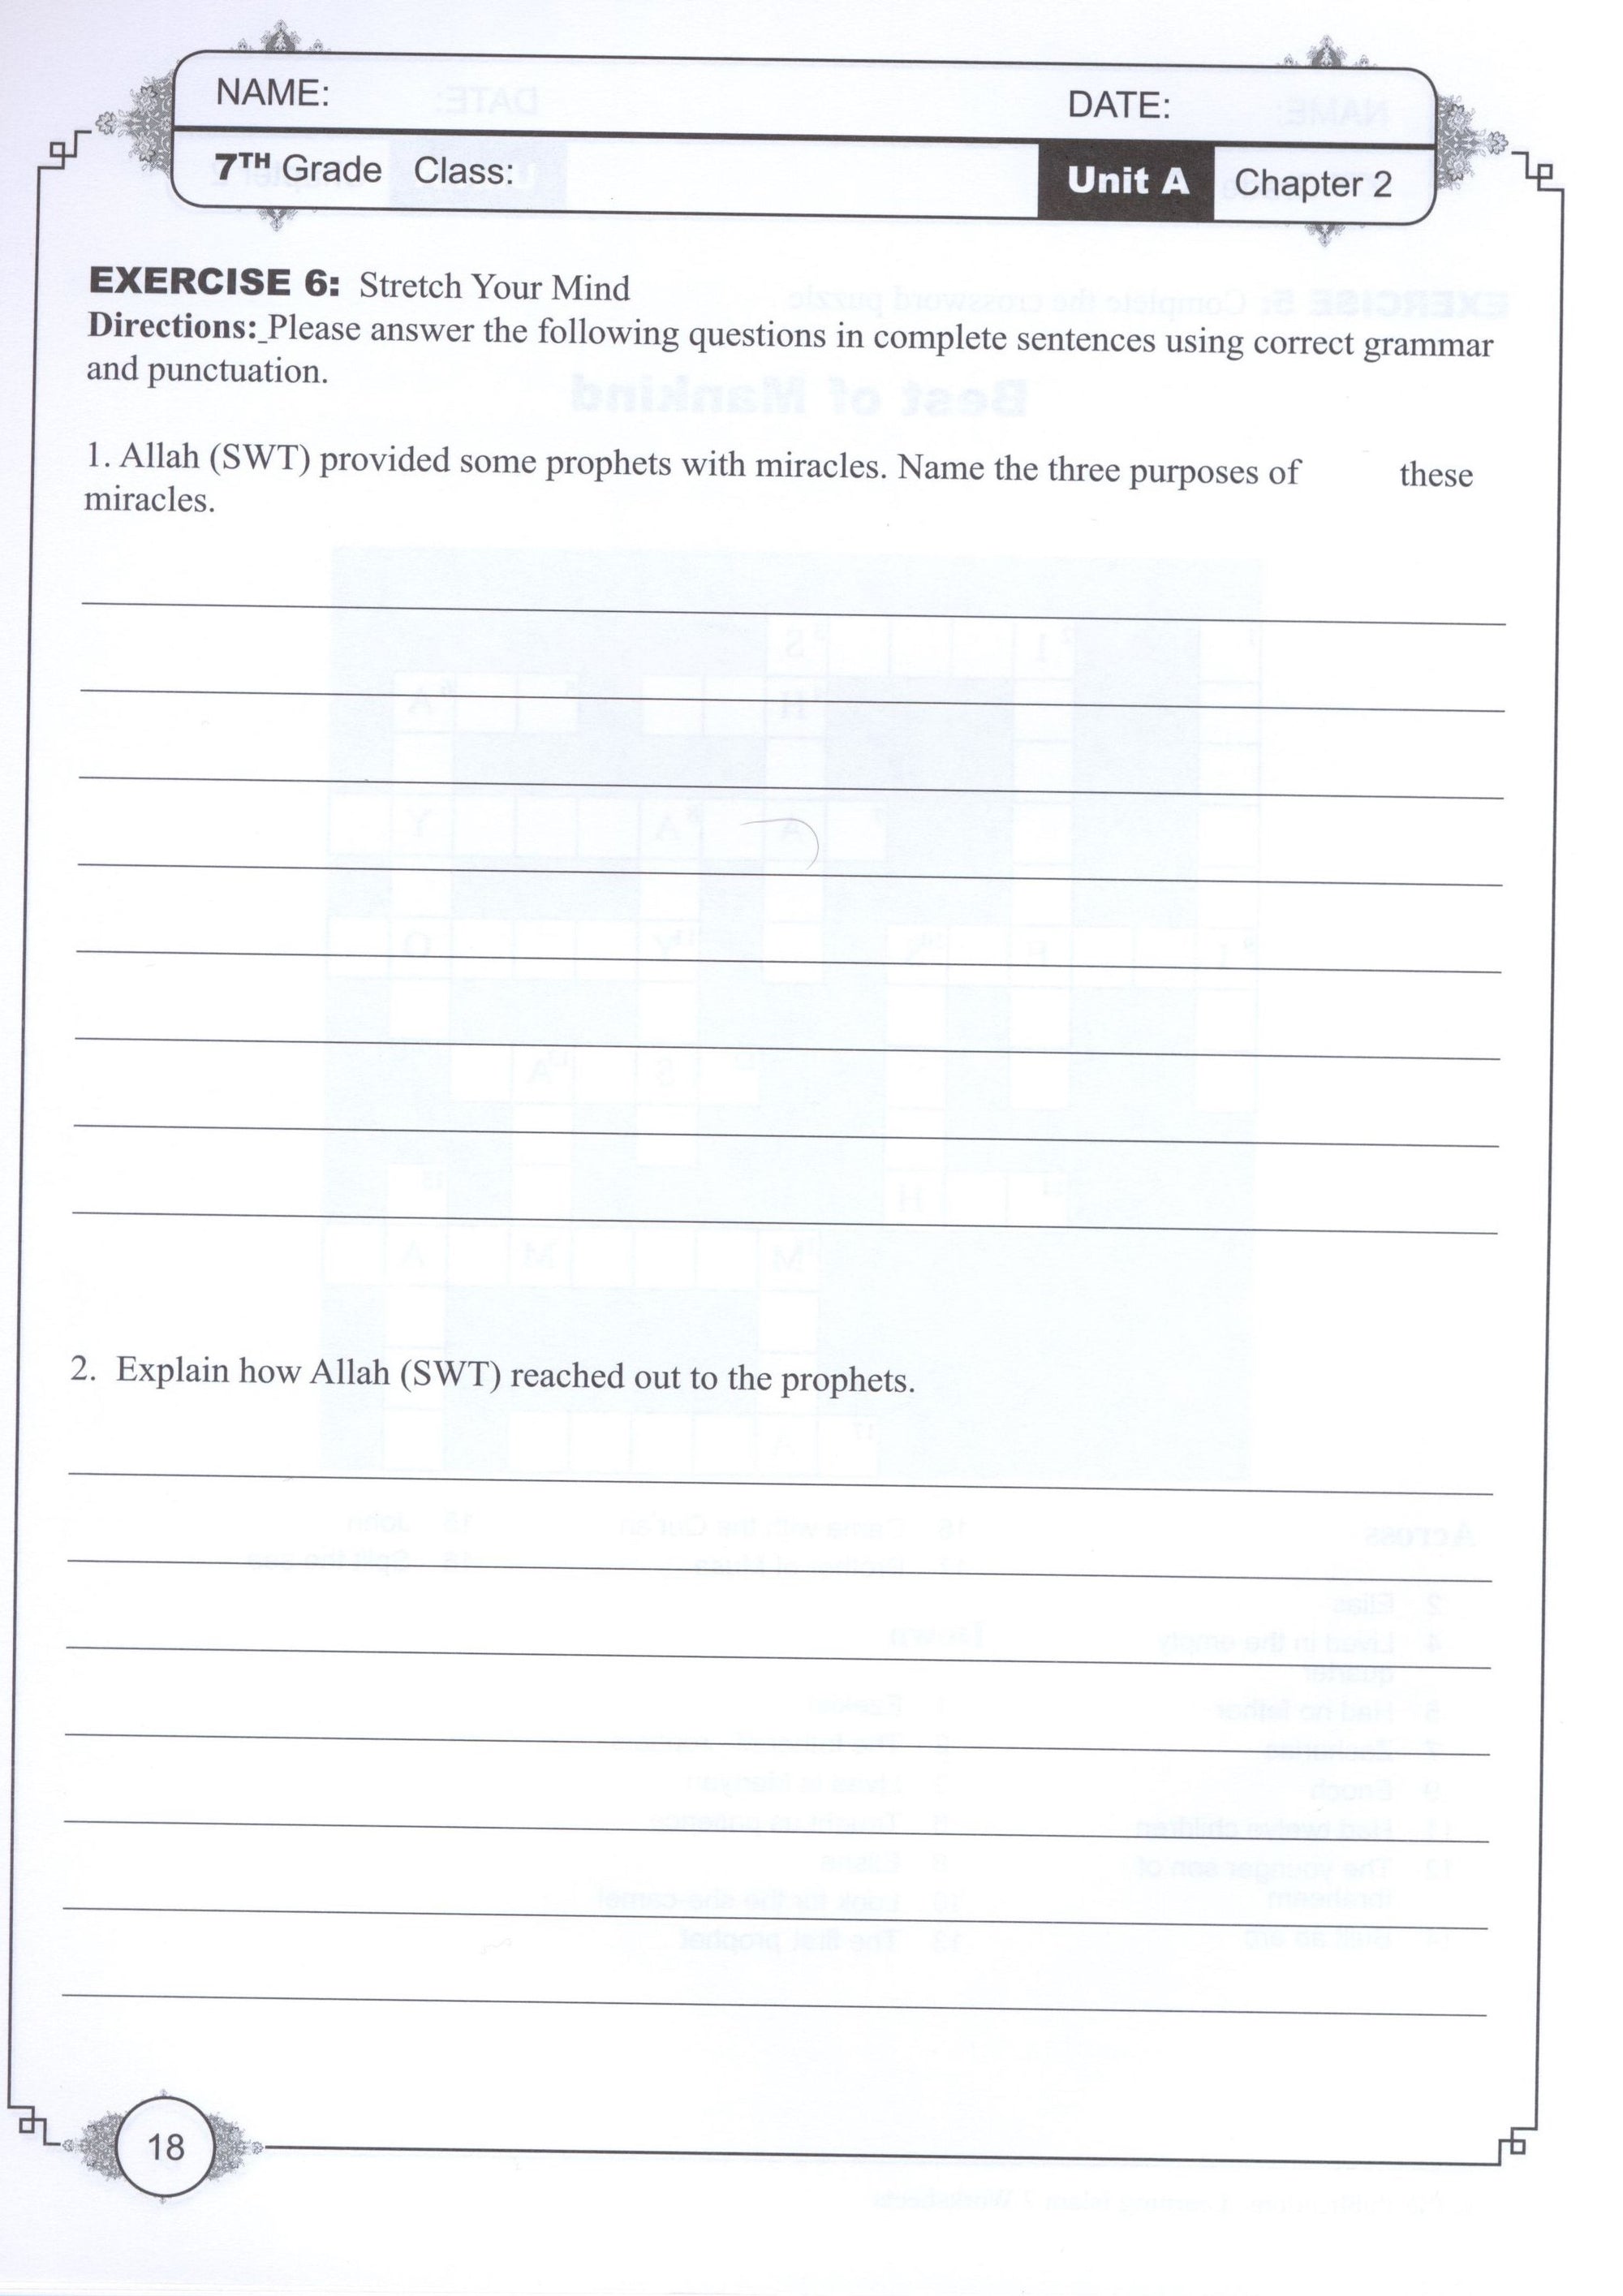 Learning Islam Workbook Level 2 (7th Grade)